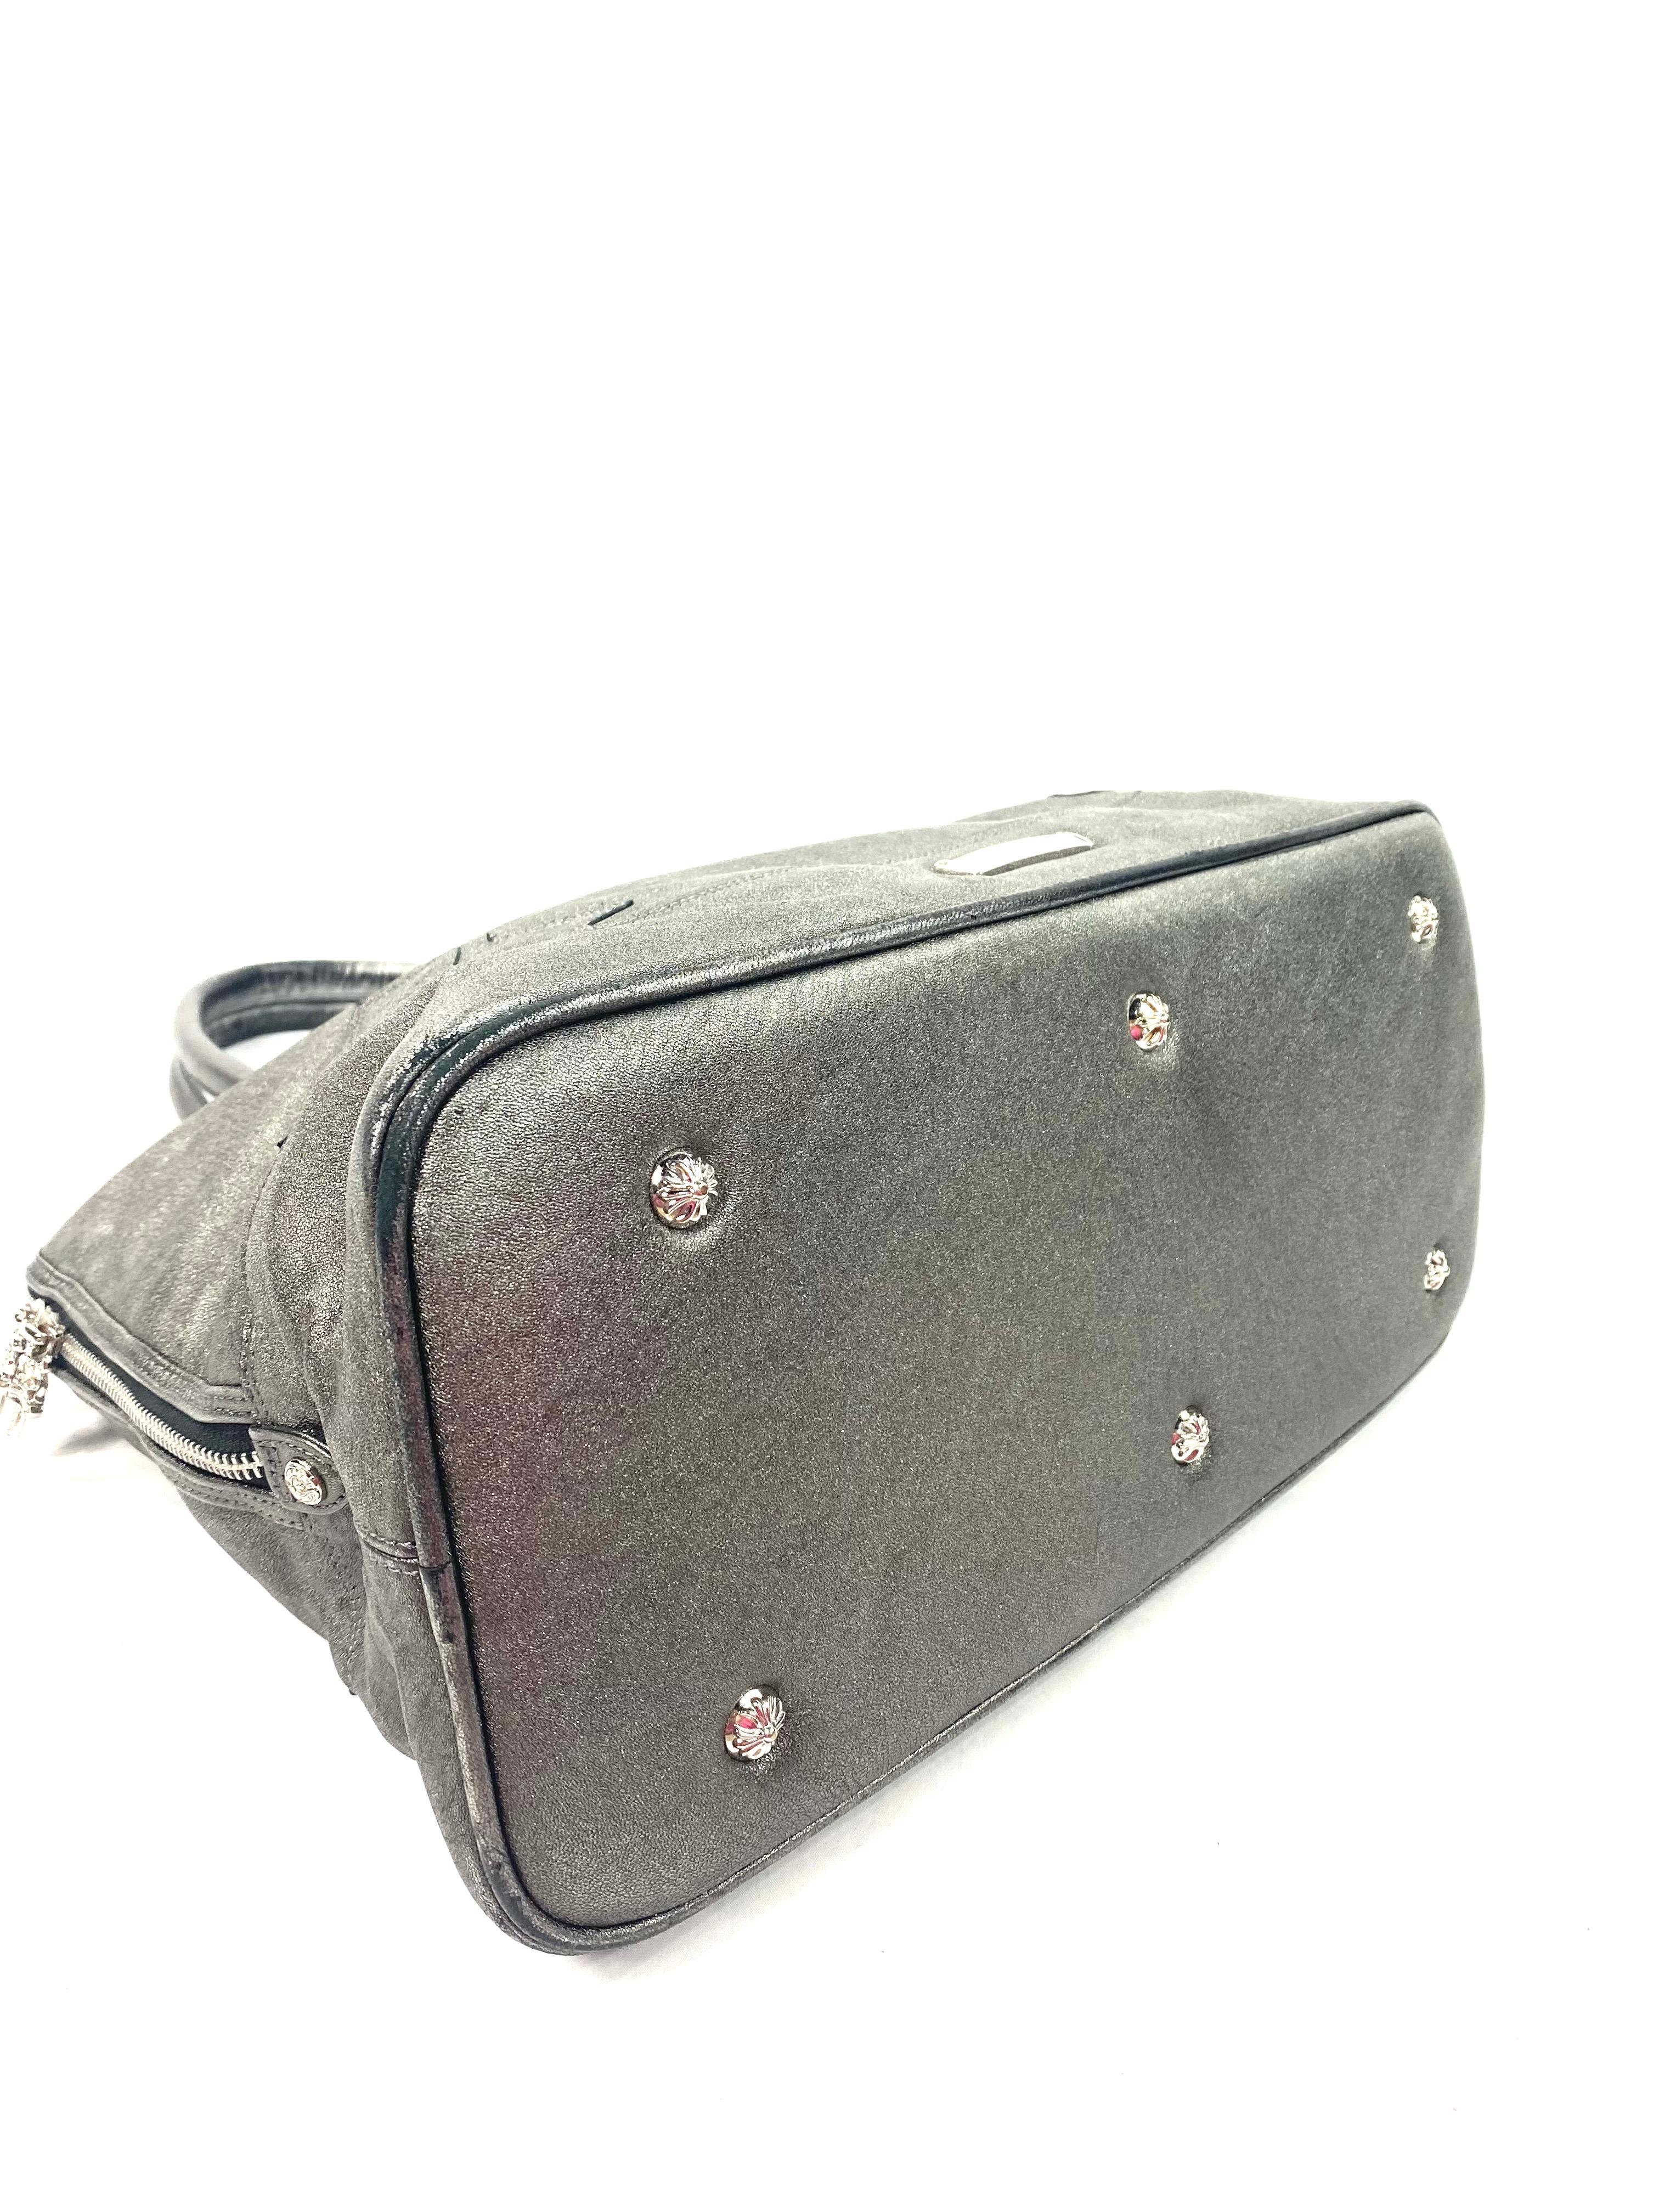 Vintage Chrome Hearts Grey Leather Sterling Silver Tote Handbag 2